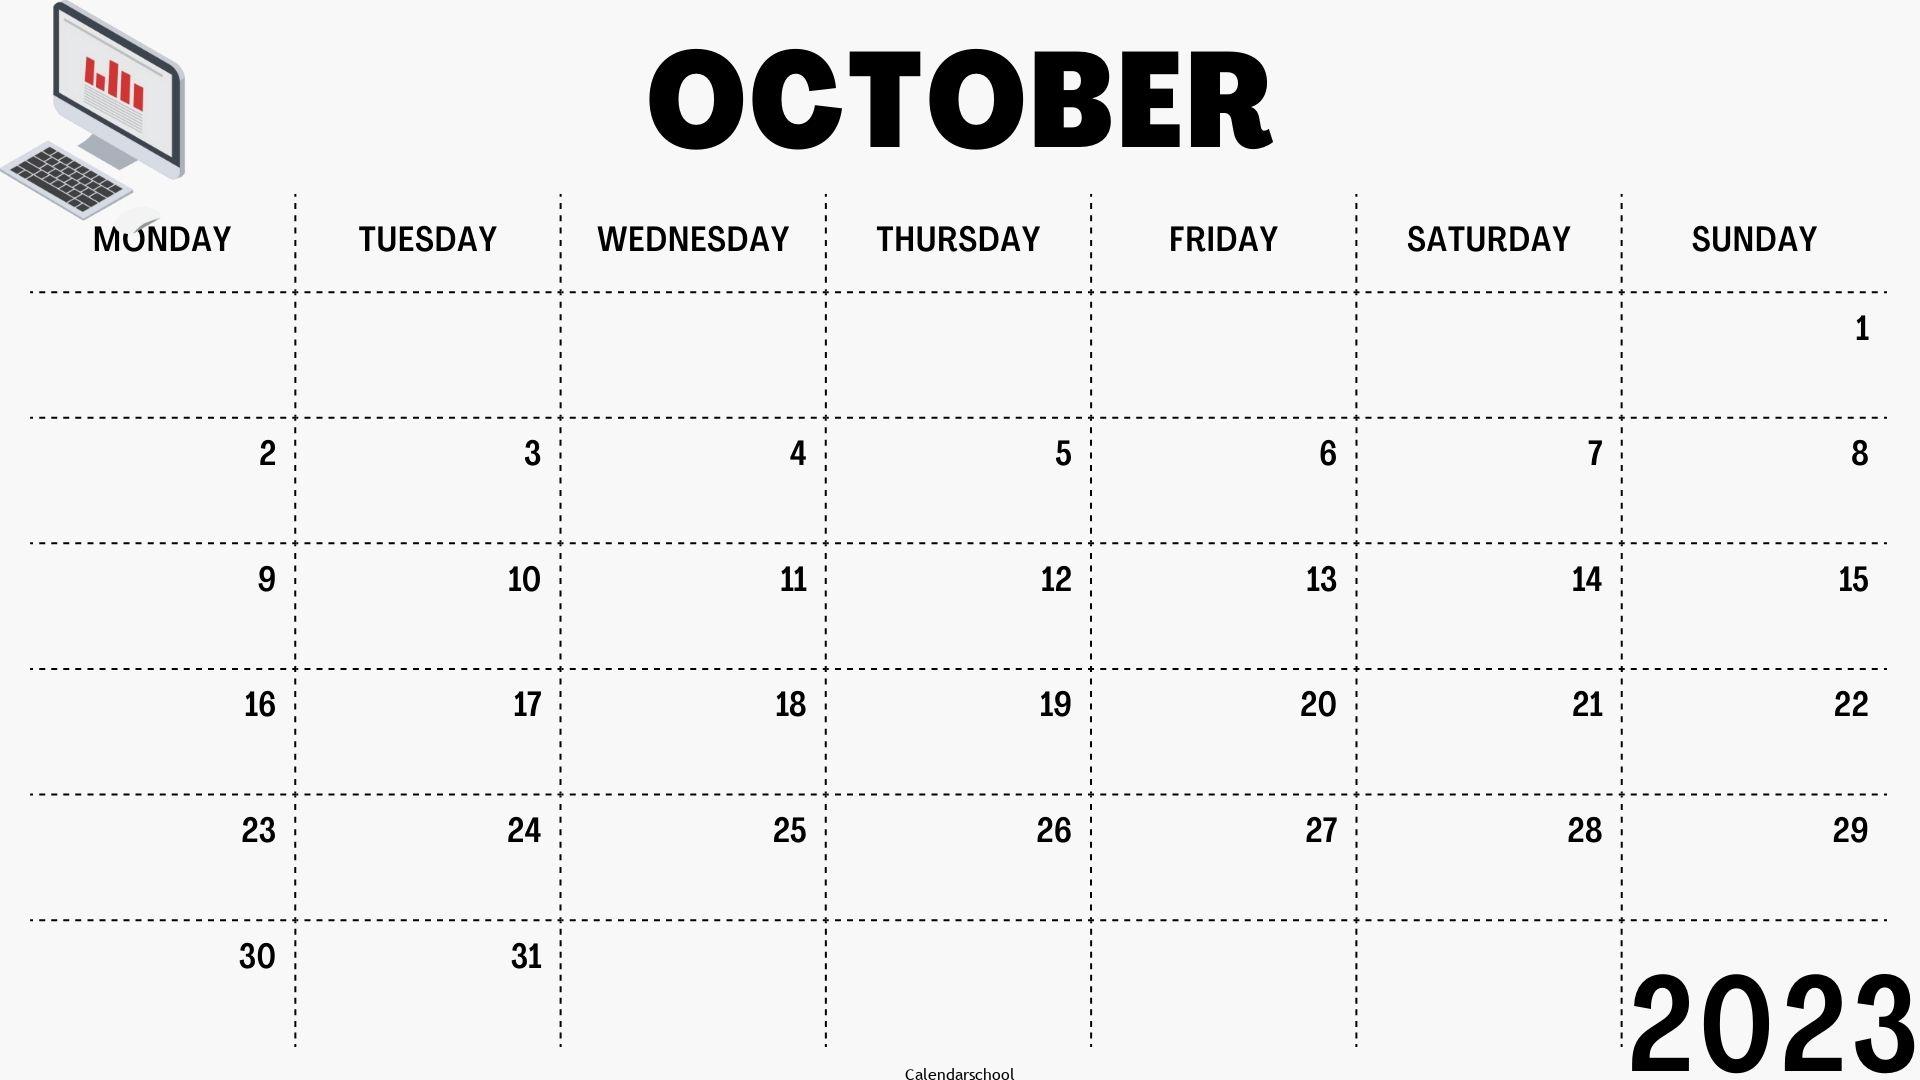 October 2023 Blank Calendar